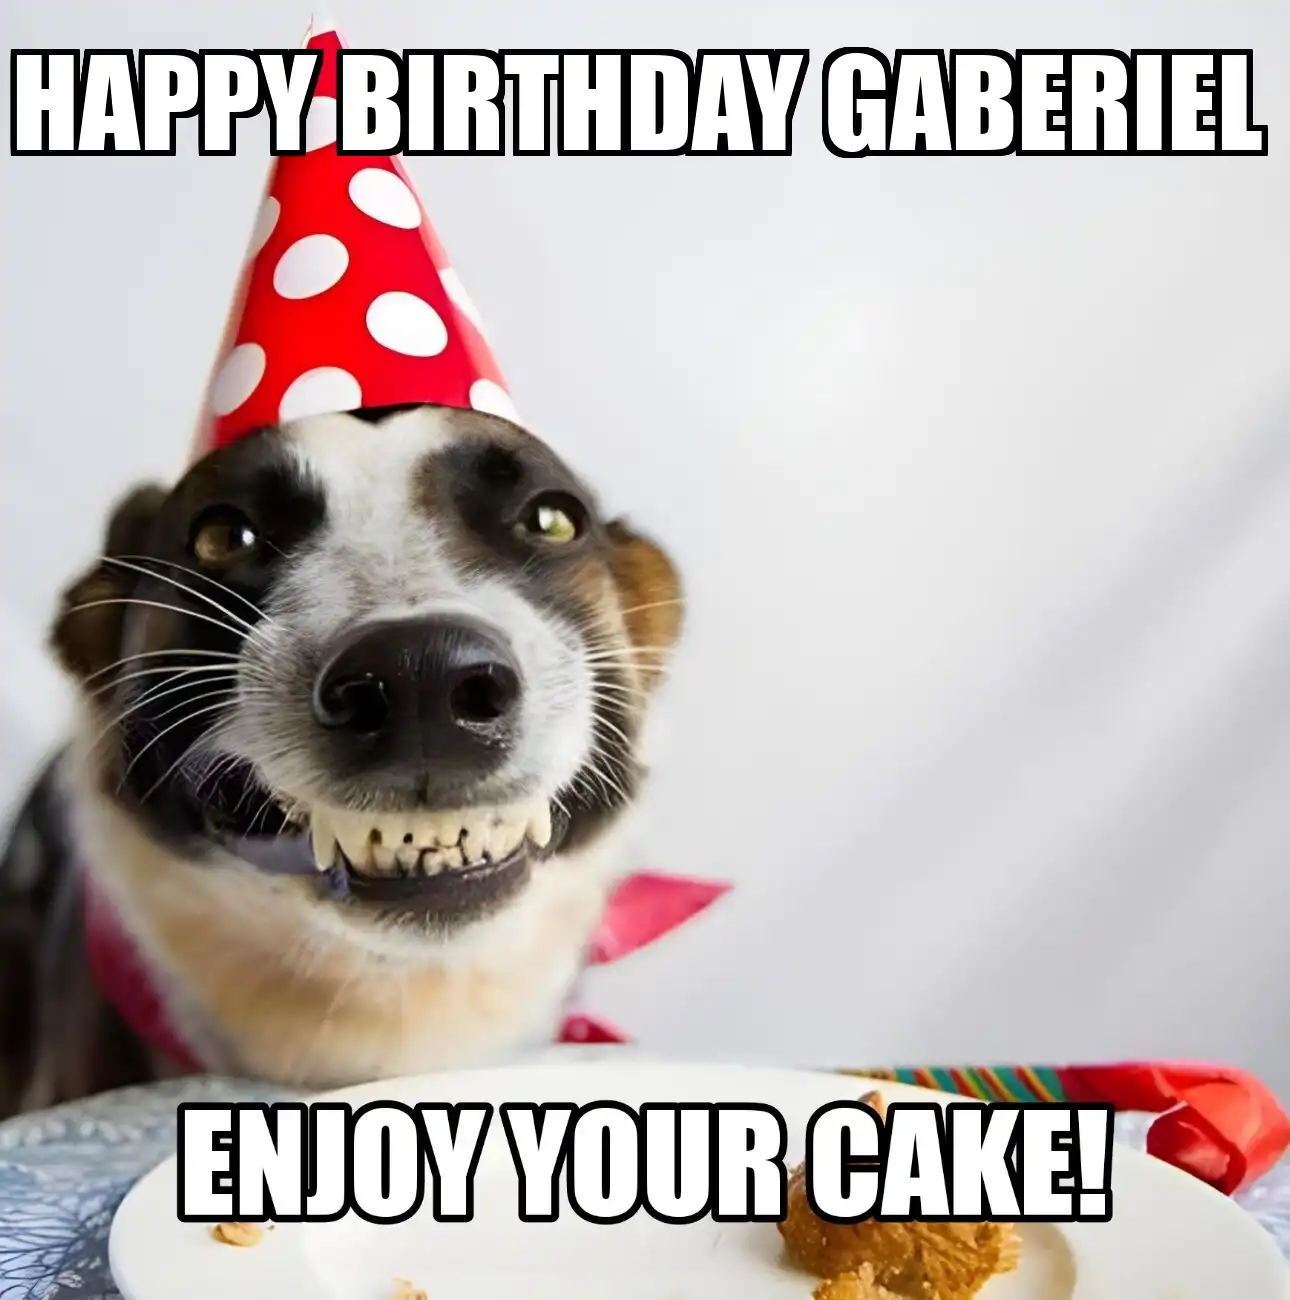 Happy Birthday Gaberiel Enjoy Your Cake Dog Meme